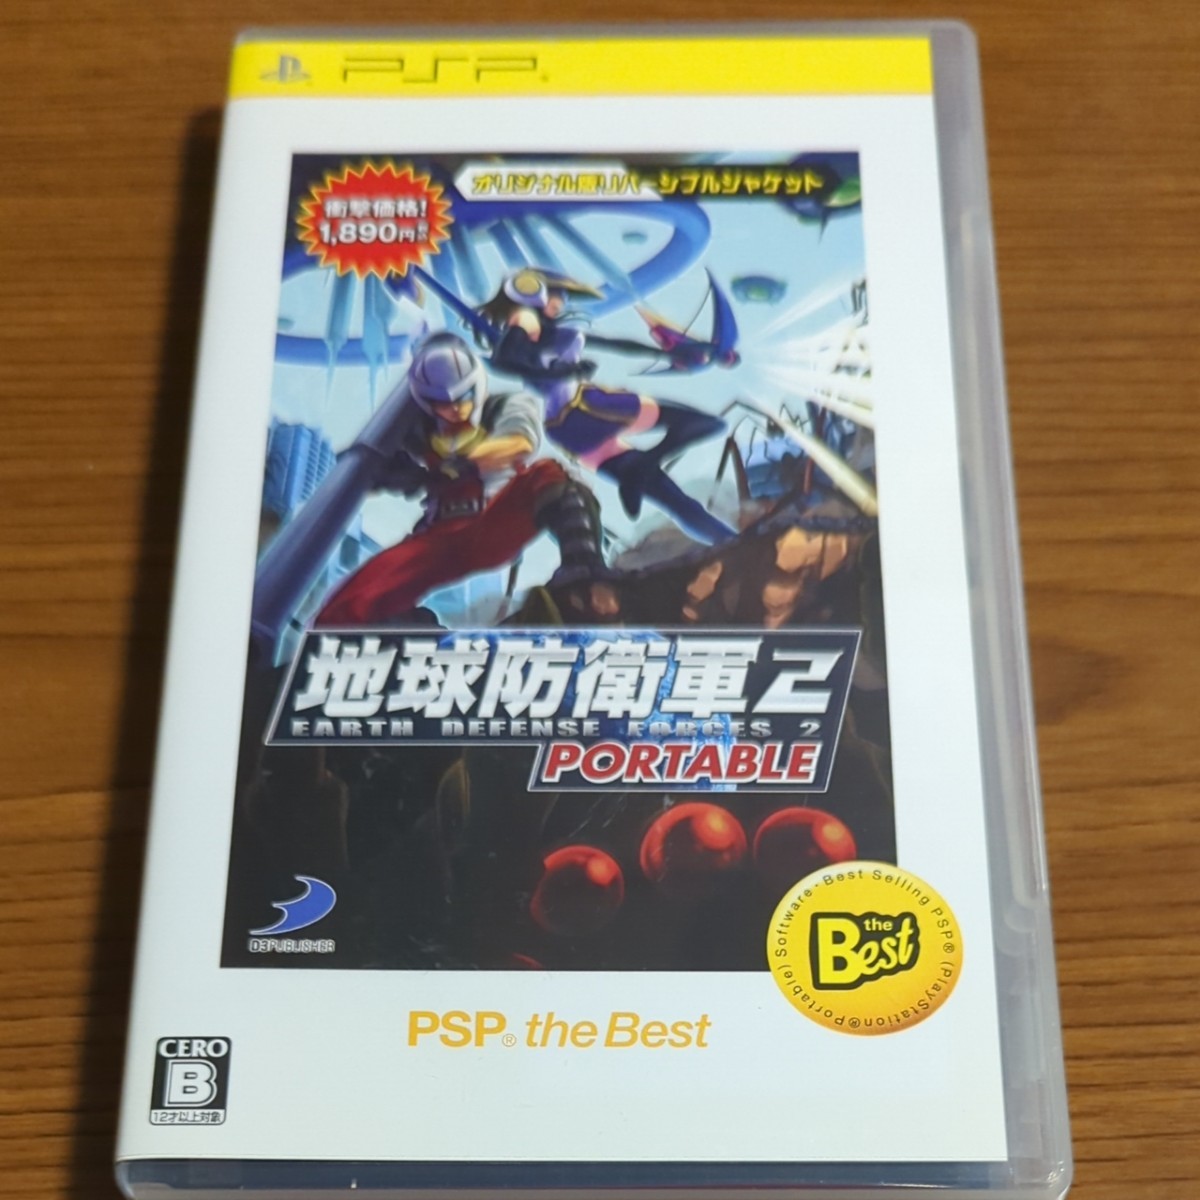 【PSP】 地球防衛軍2 PORTABLE [PSP the Best]